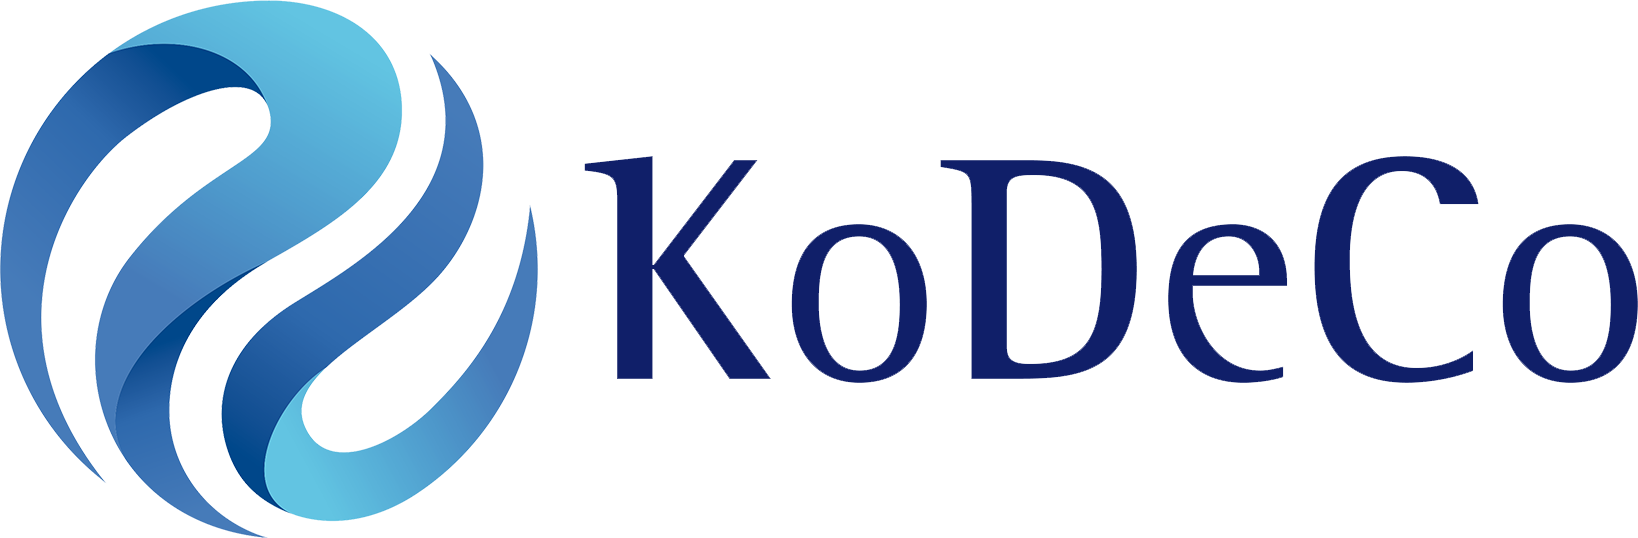 KoDeCo Fortbildungsinstitut logo